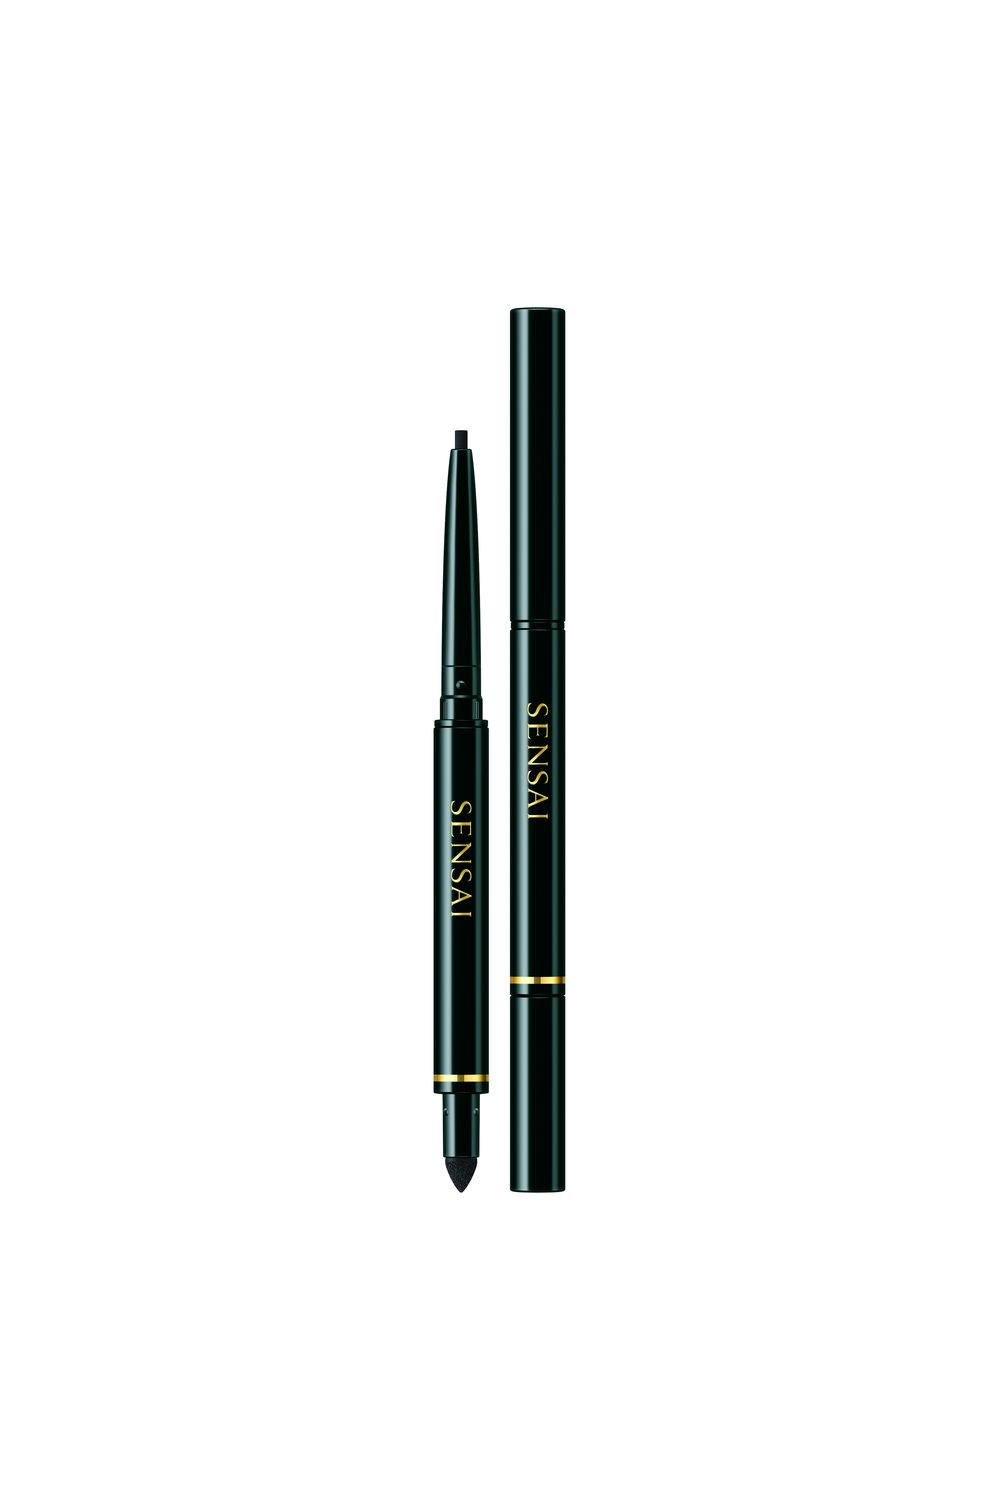 Sensai Lasting Eyeliner Pencil 01 Black